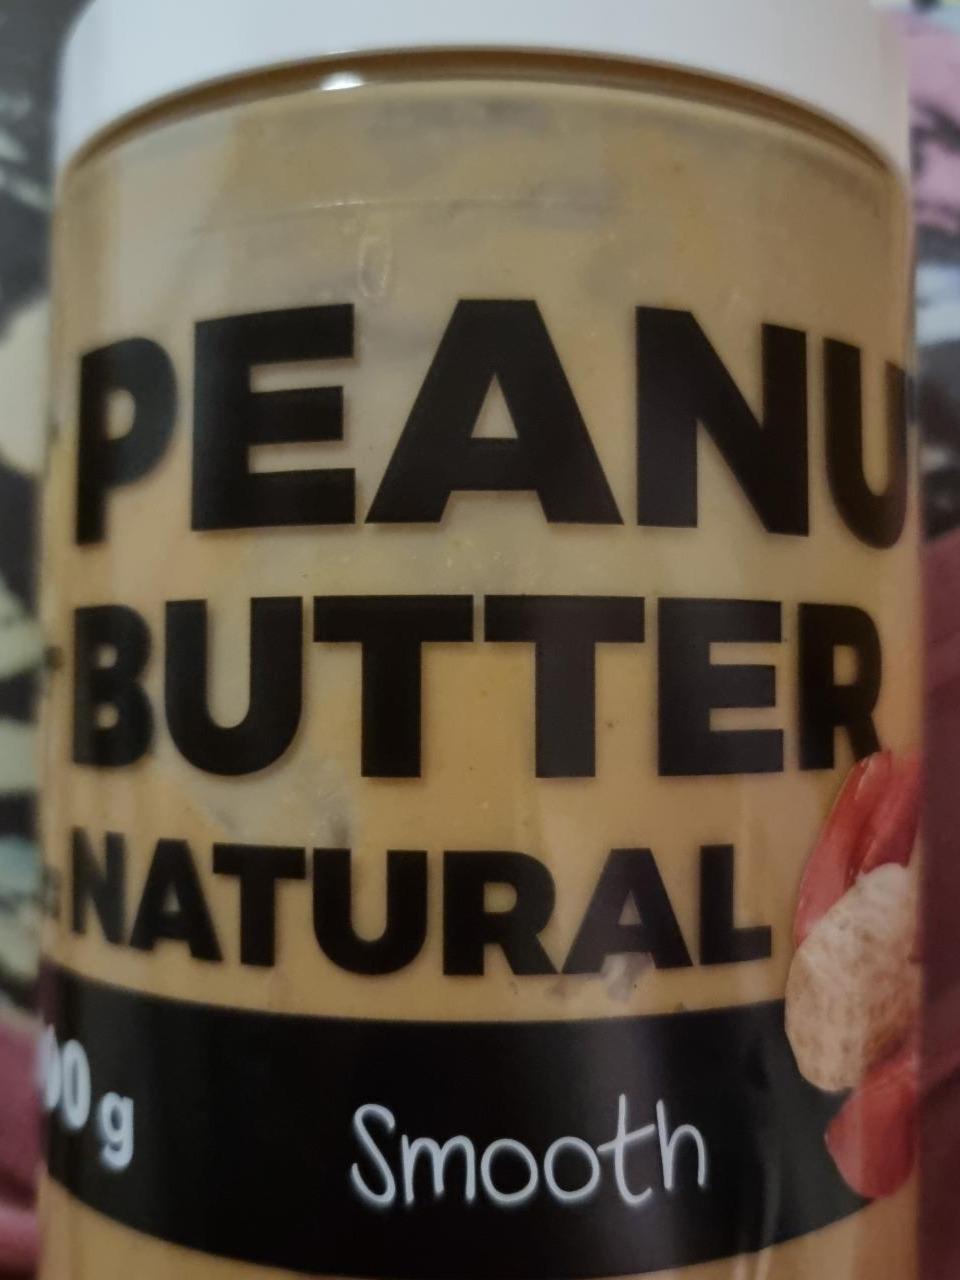 Fotografie - Peanut Butter Natural Smooth 7Nutrition